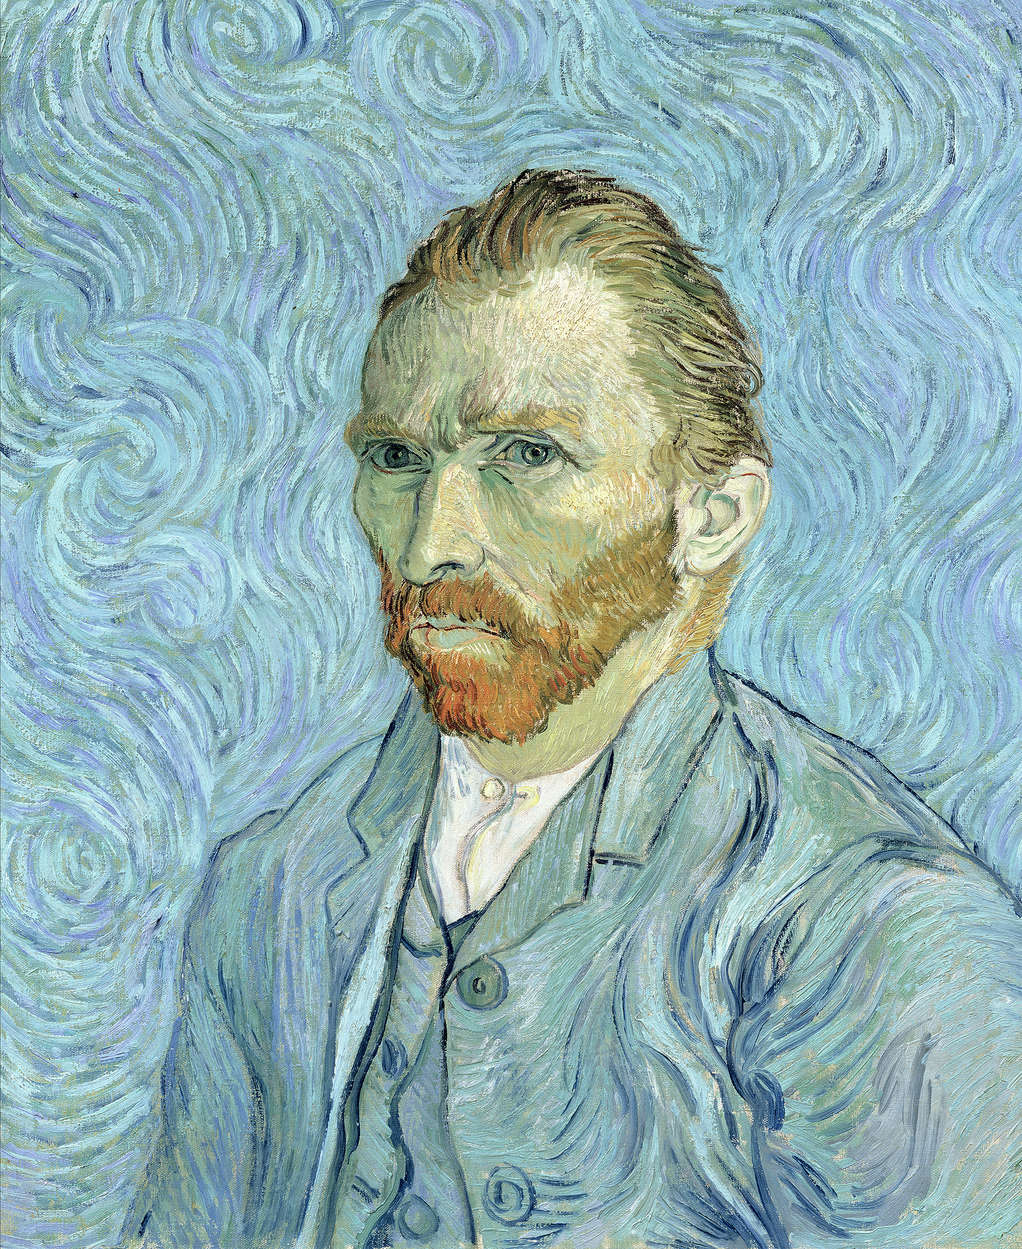             Mural "Autorretrato" de Vincent van Gogh
        